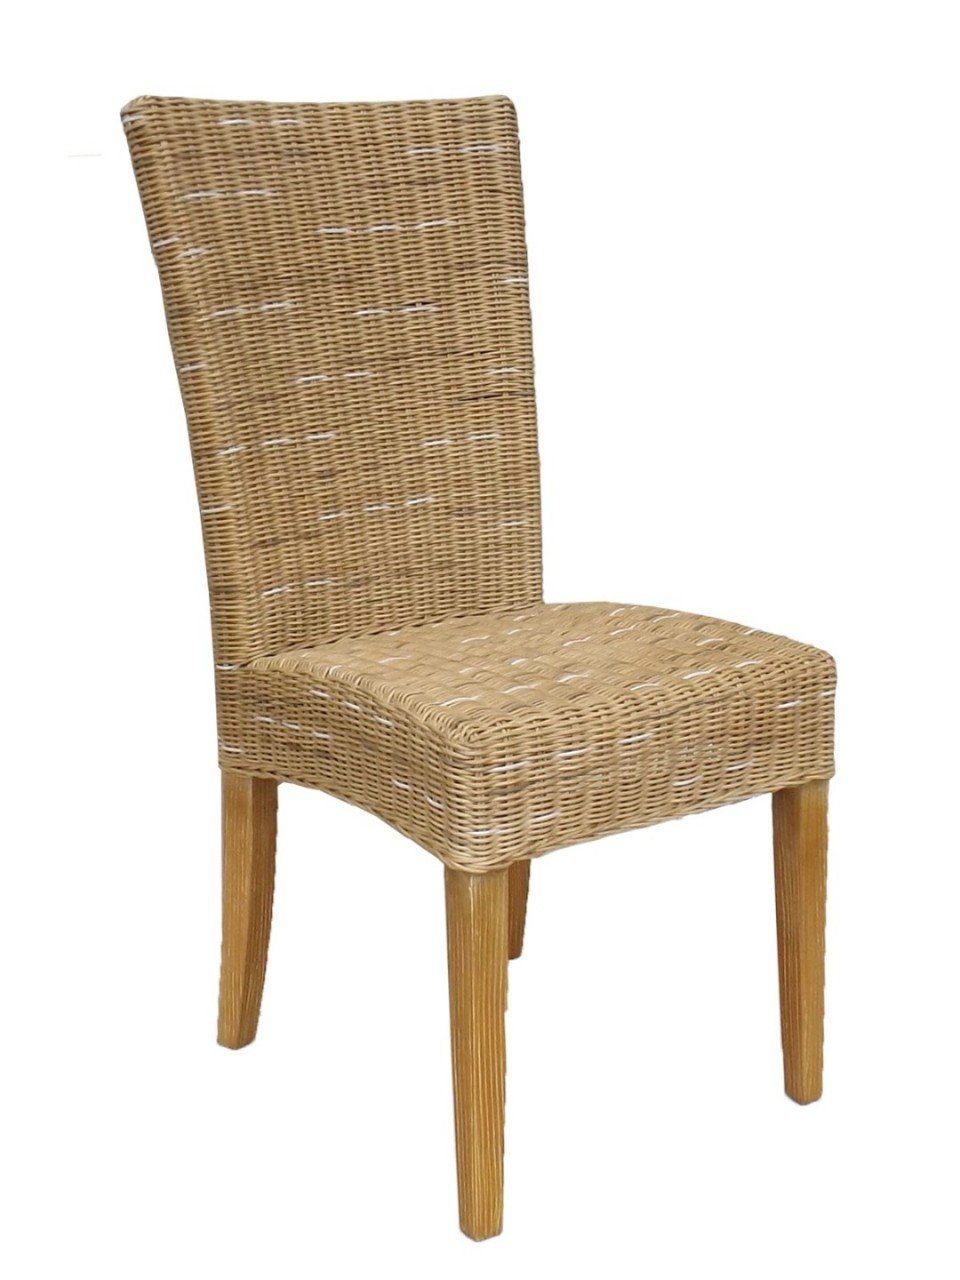 soma Sessel Sitzmöbel Stuhl mit/ohne Sitzplatz Rattanstühle Stück Cardine Sitzki, Stühle Esszimmer Sessel Soma 4 Set